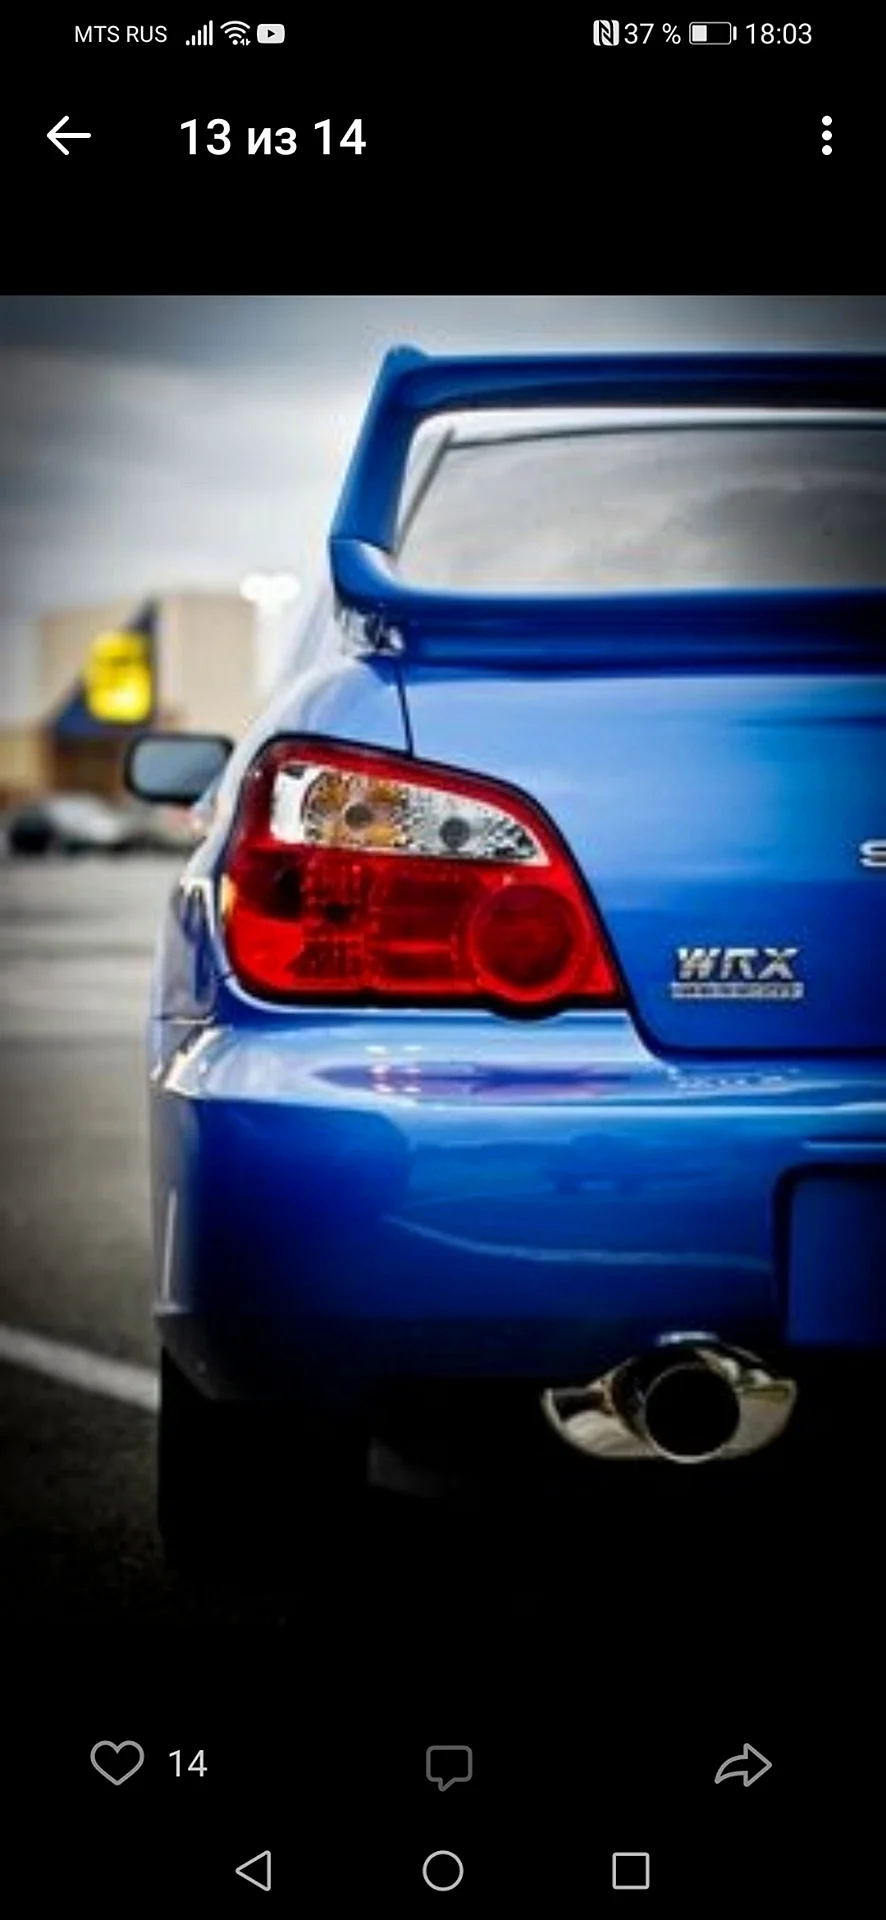 Subaru Impreza Wrx Sti Wallpaper For iPhone